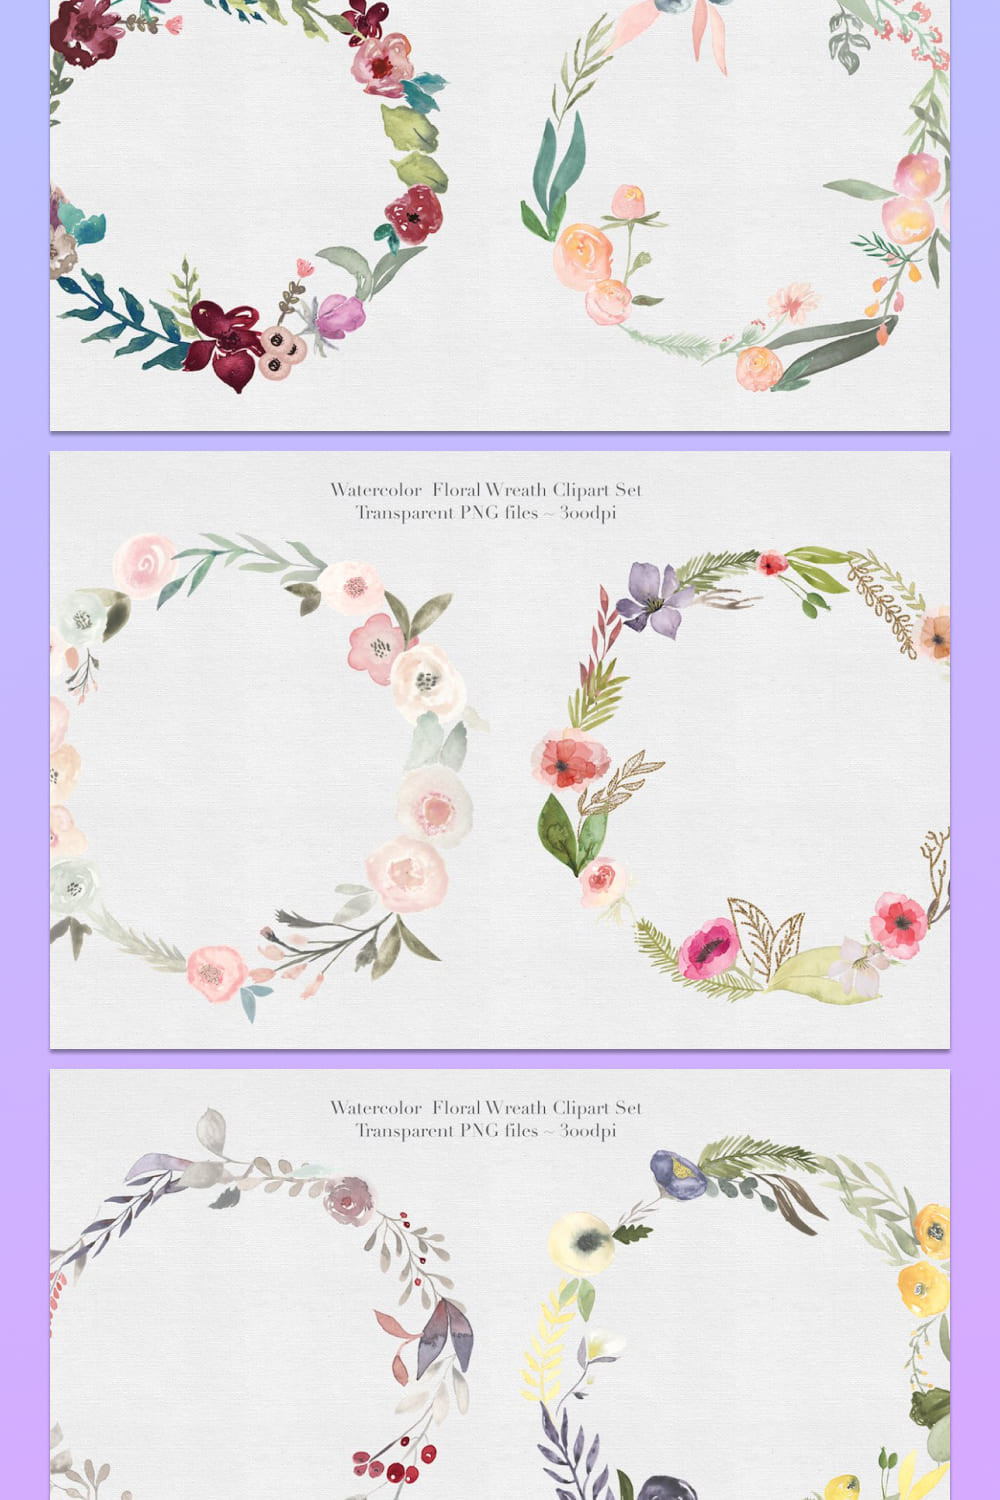 watercolor floral wreaths original design.